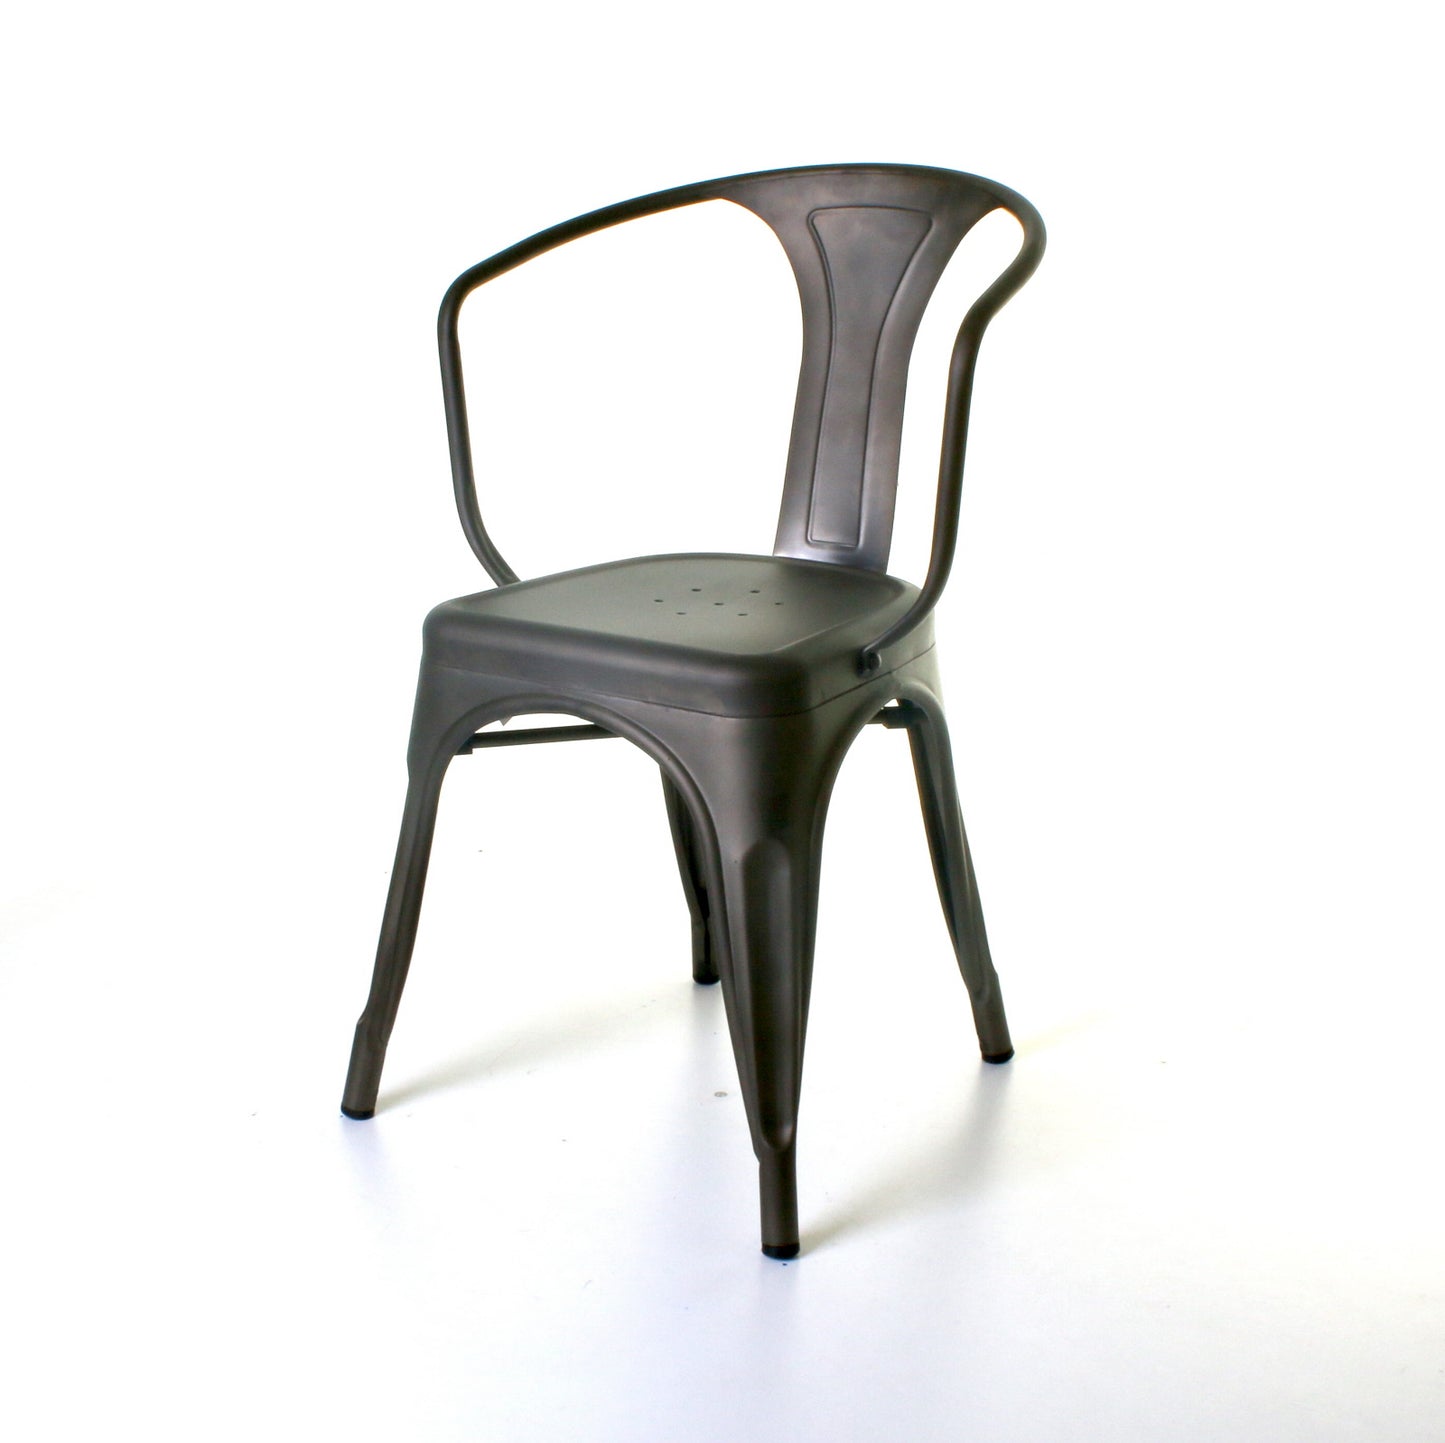 5PC Enna Table Forli & Siena Chairs Set - Gun Metal Grey